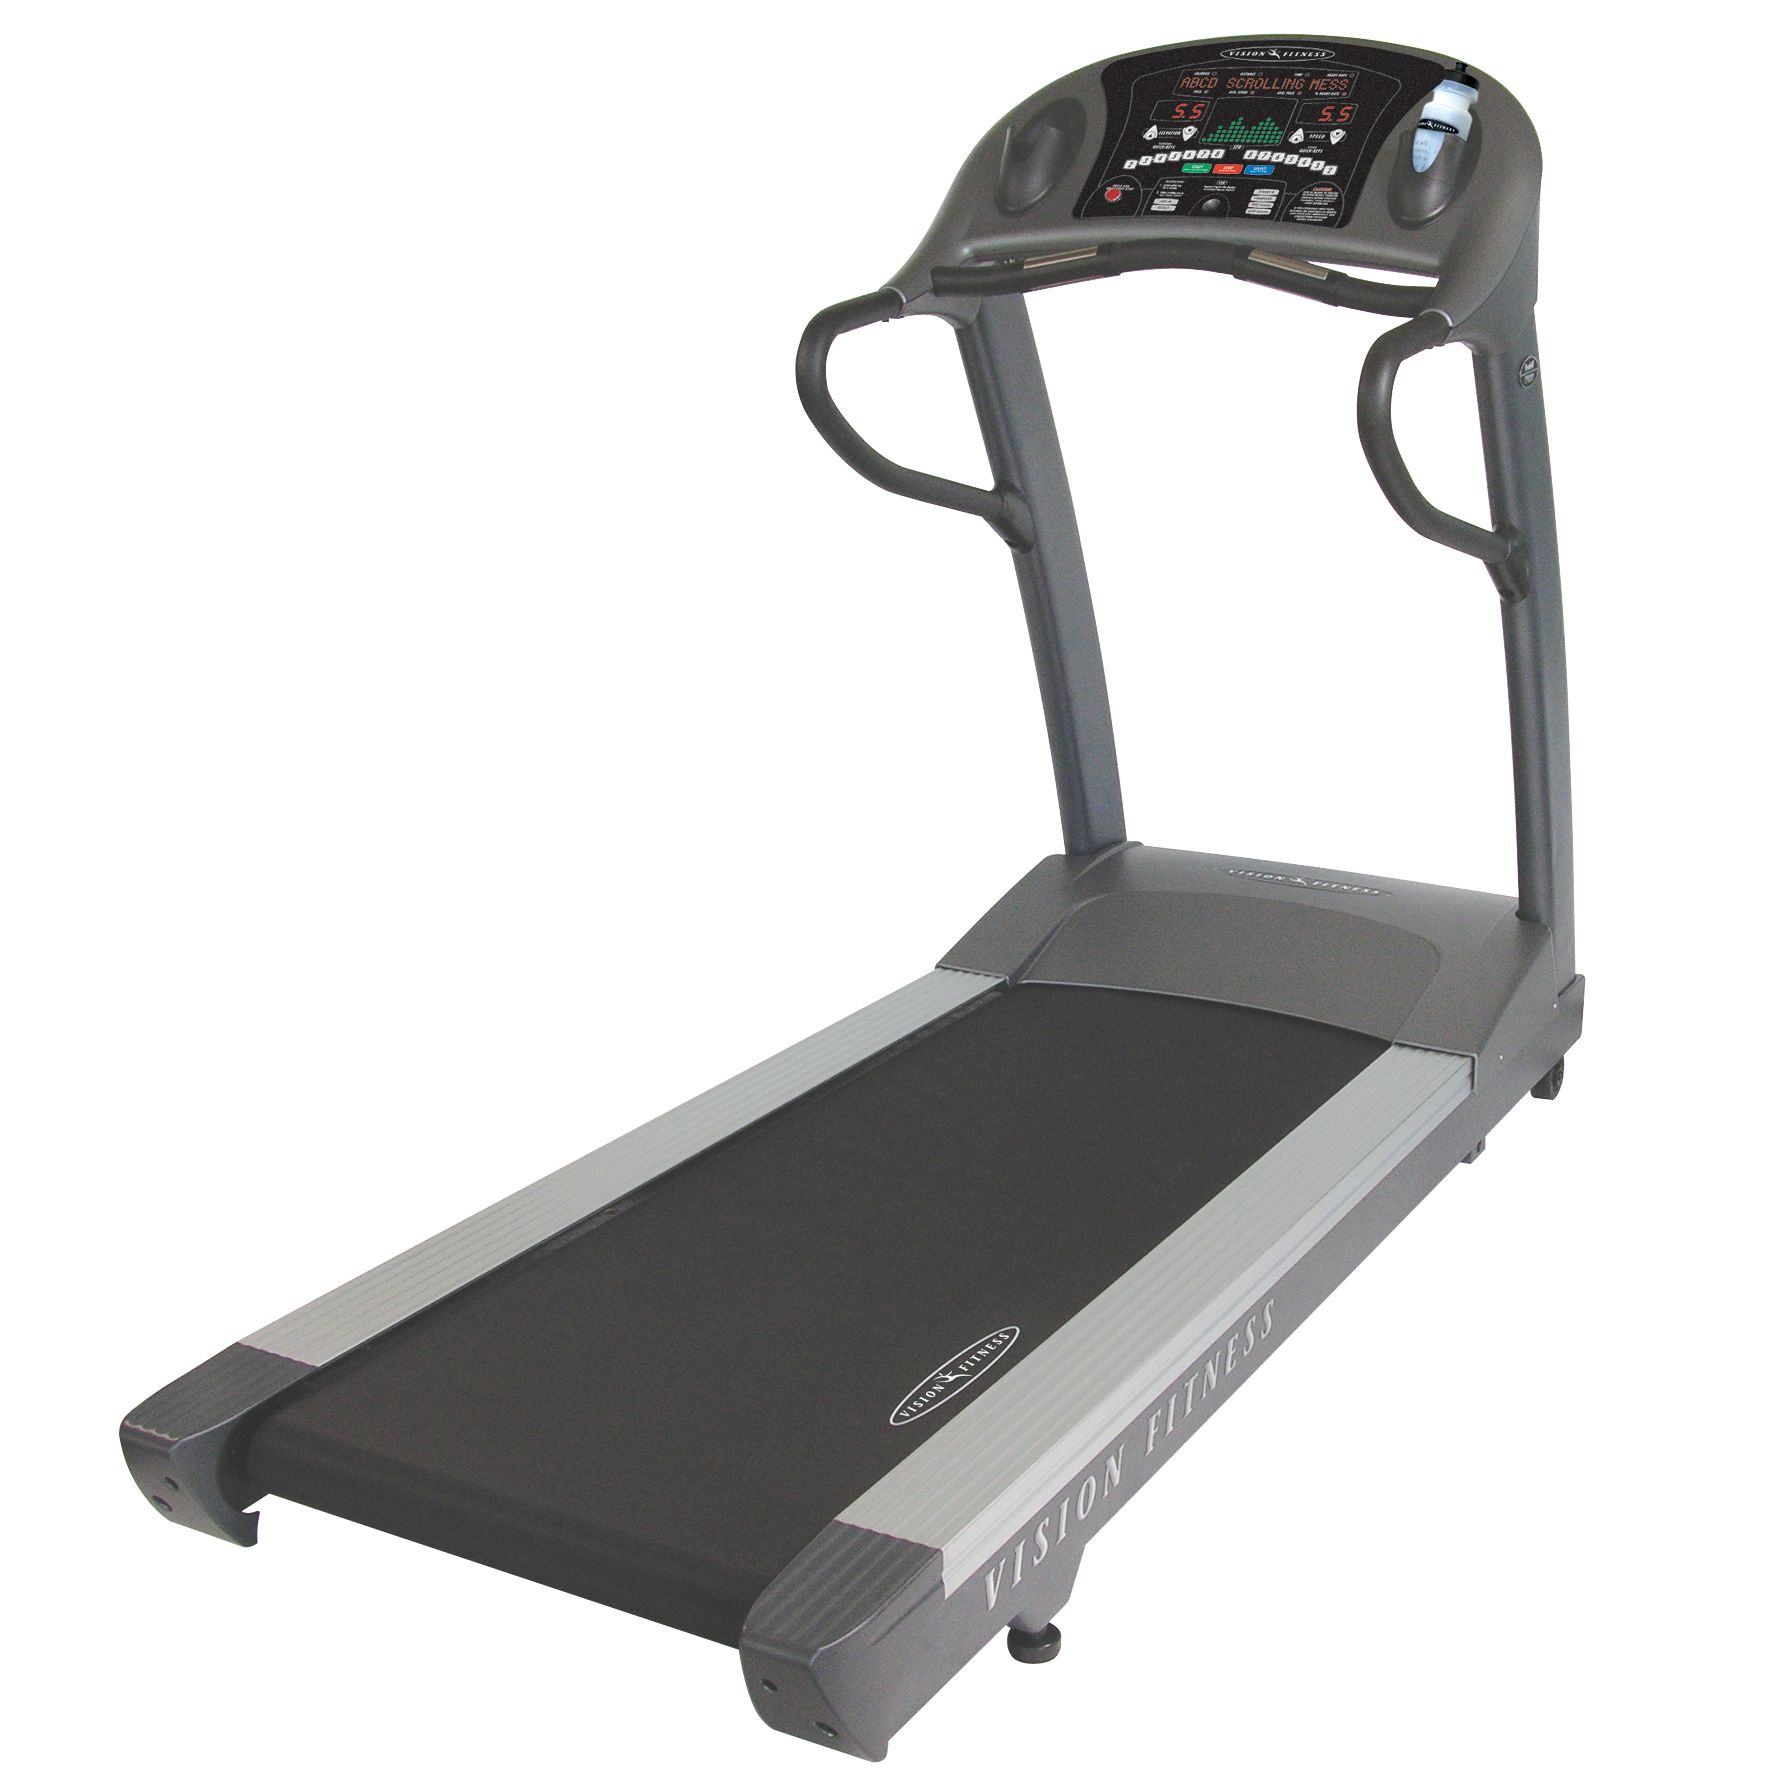 Vision Fitness T9800 HRT Treadmill at John Lewis